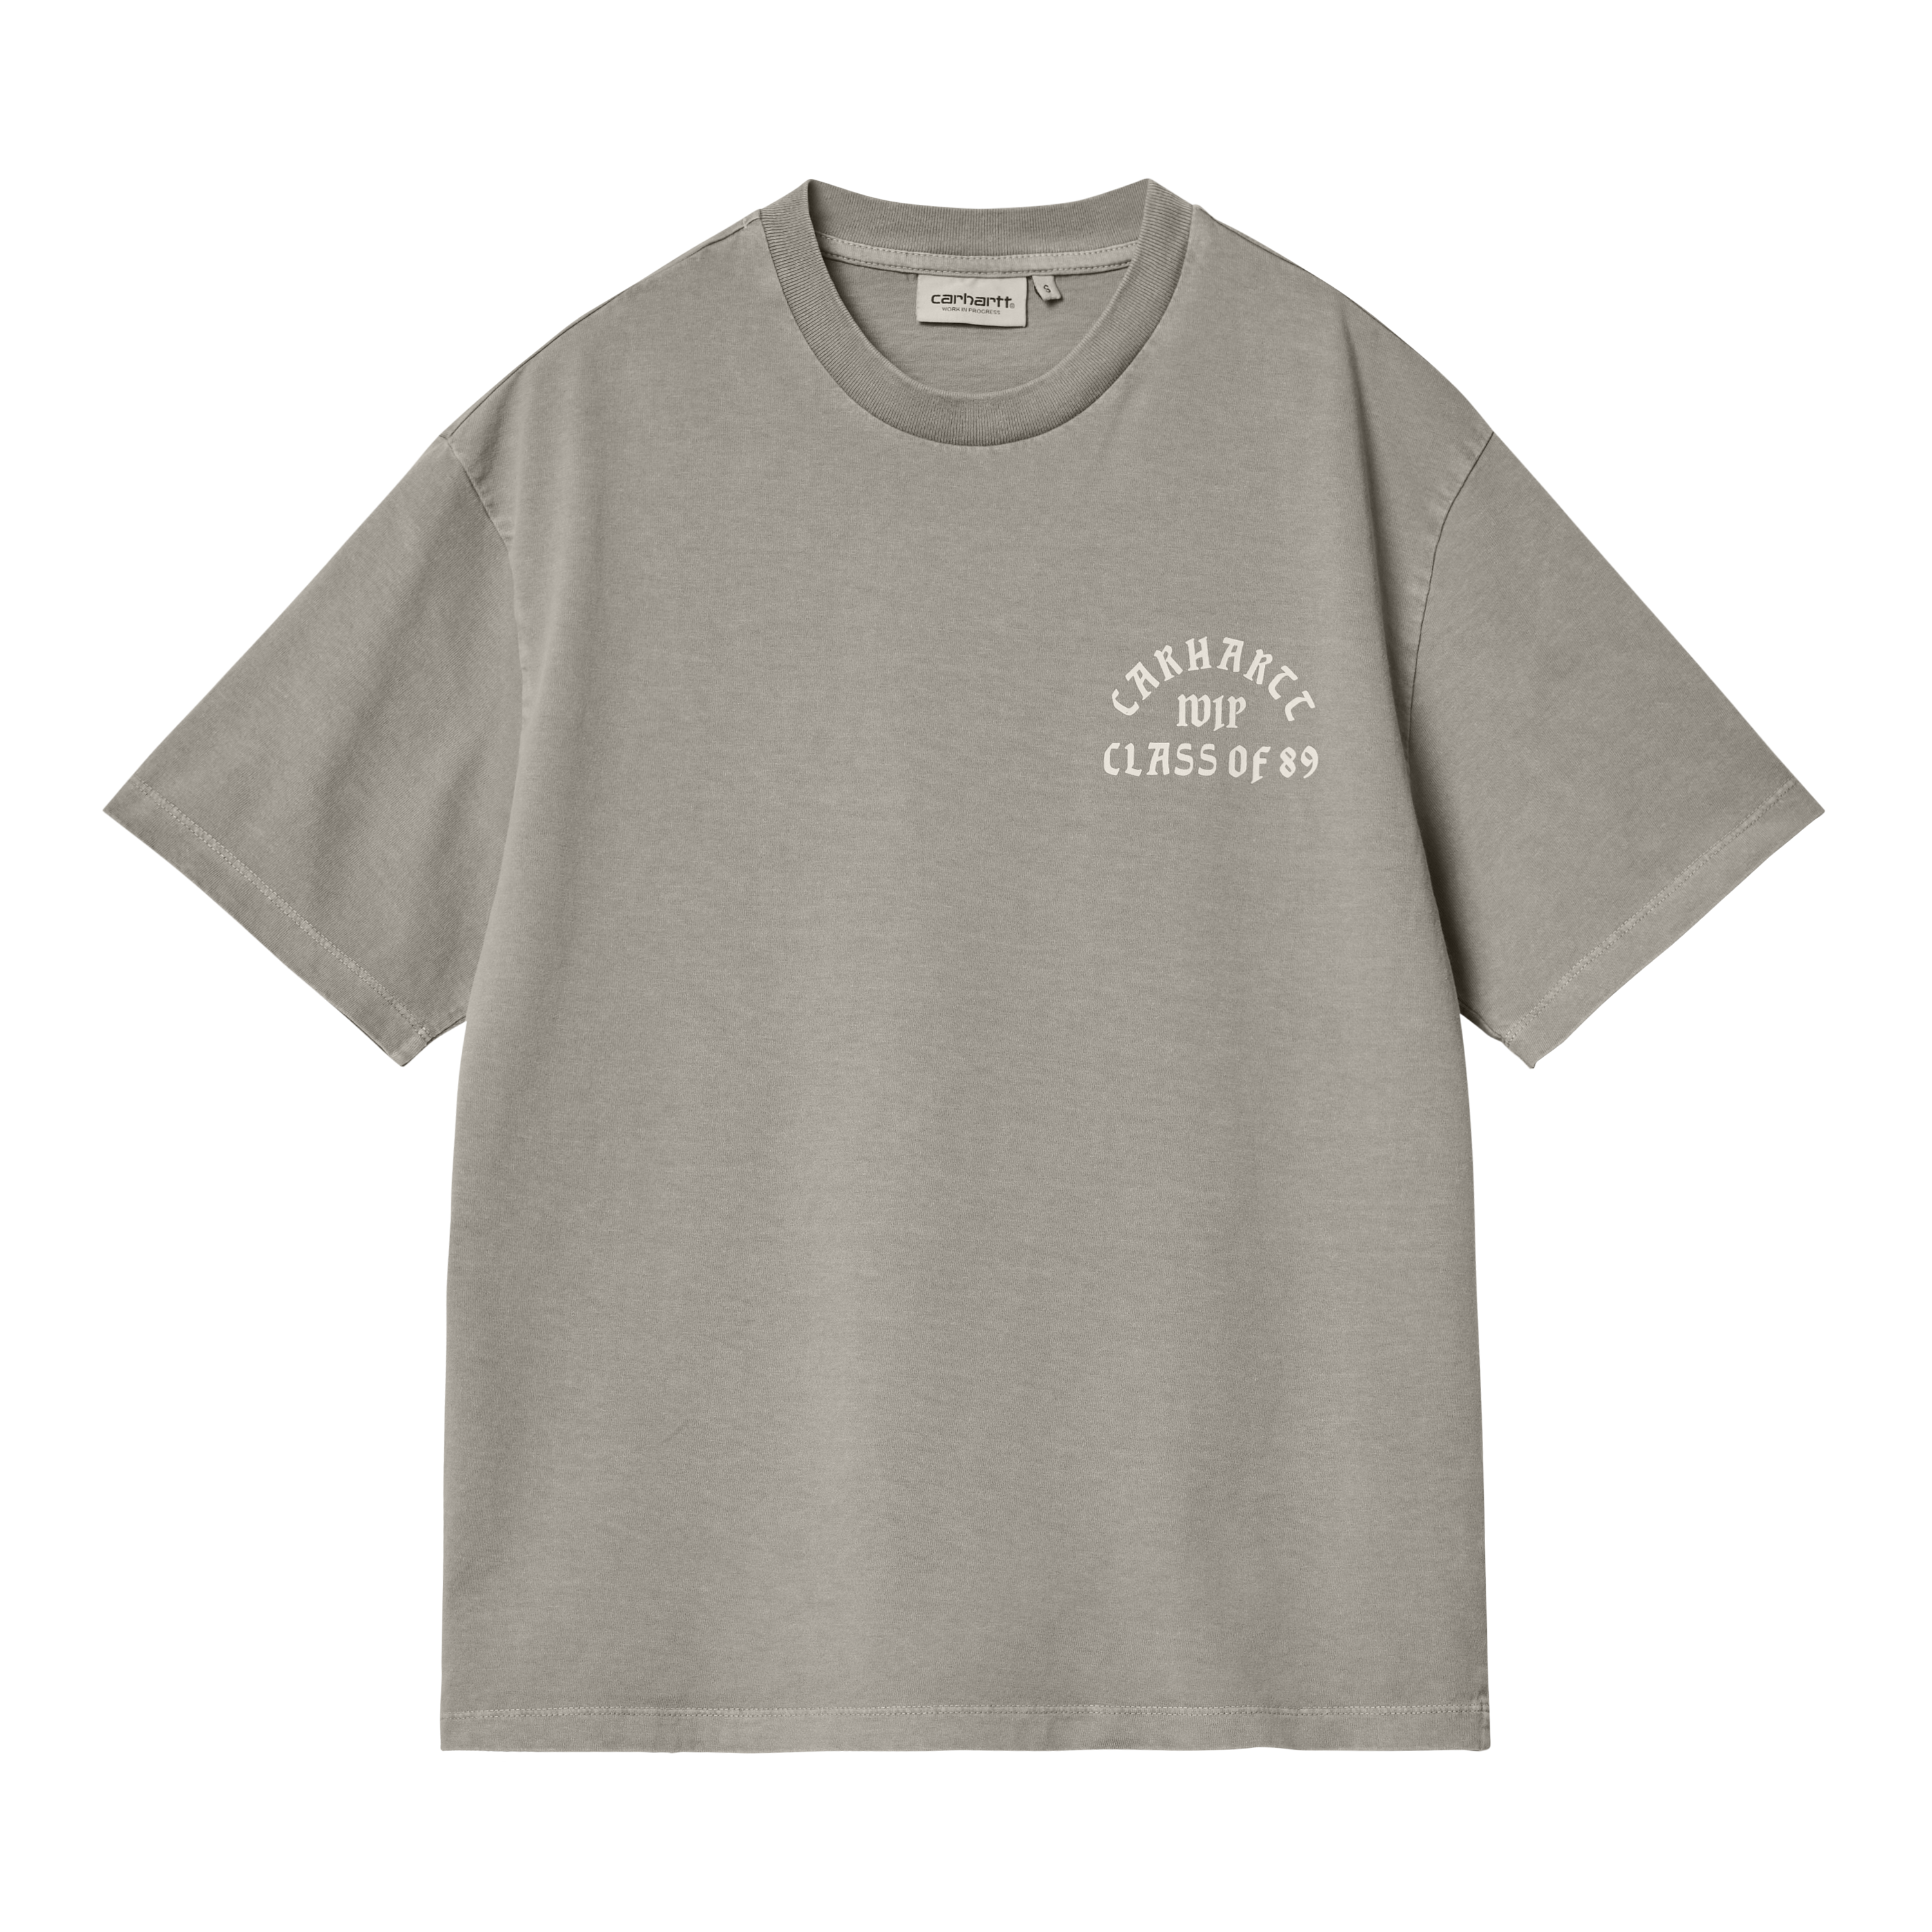 Carhartt WIP Women’s Short Sleeve Class of 89 T-Shirt in Grigio